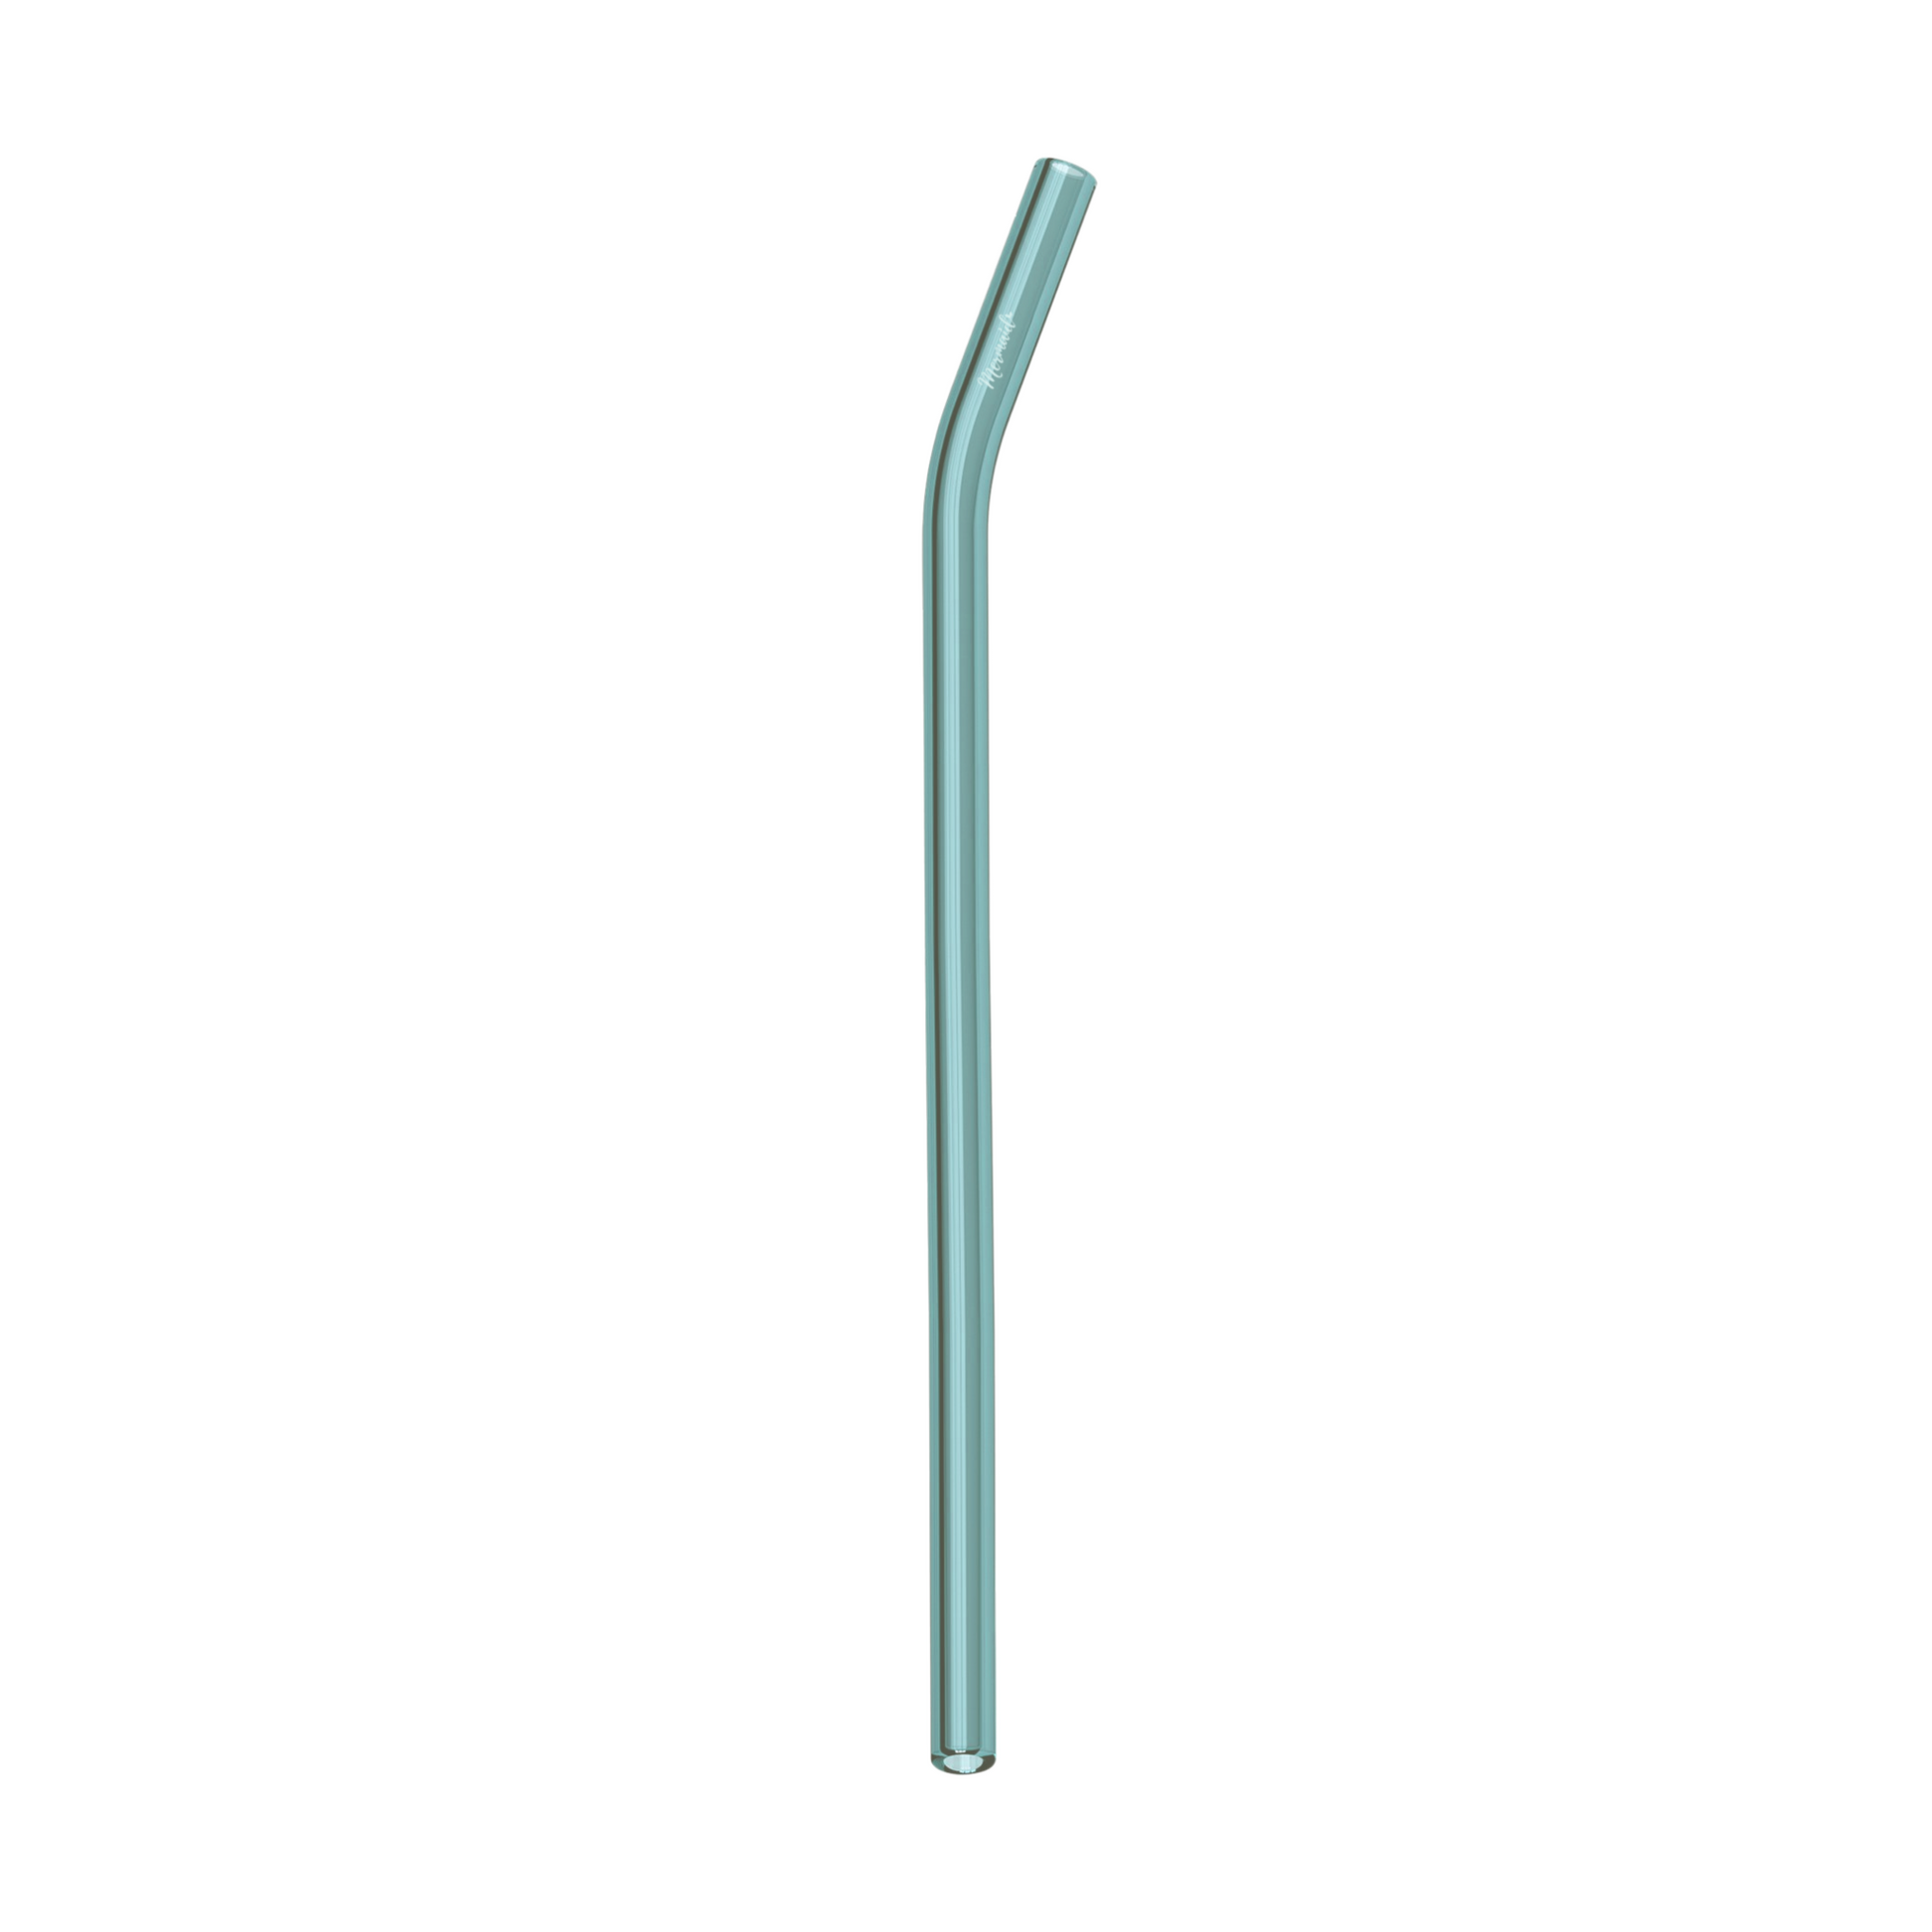 Glass Straws, Mermaid Straw, Reusable Straw, teal glass curved single